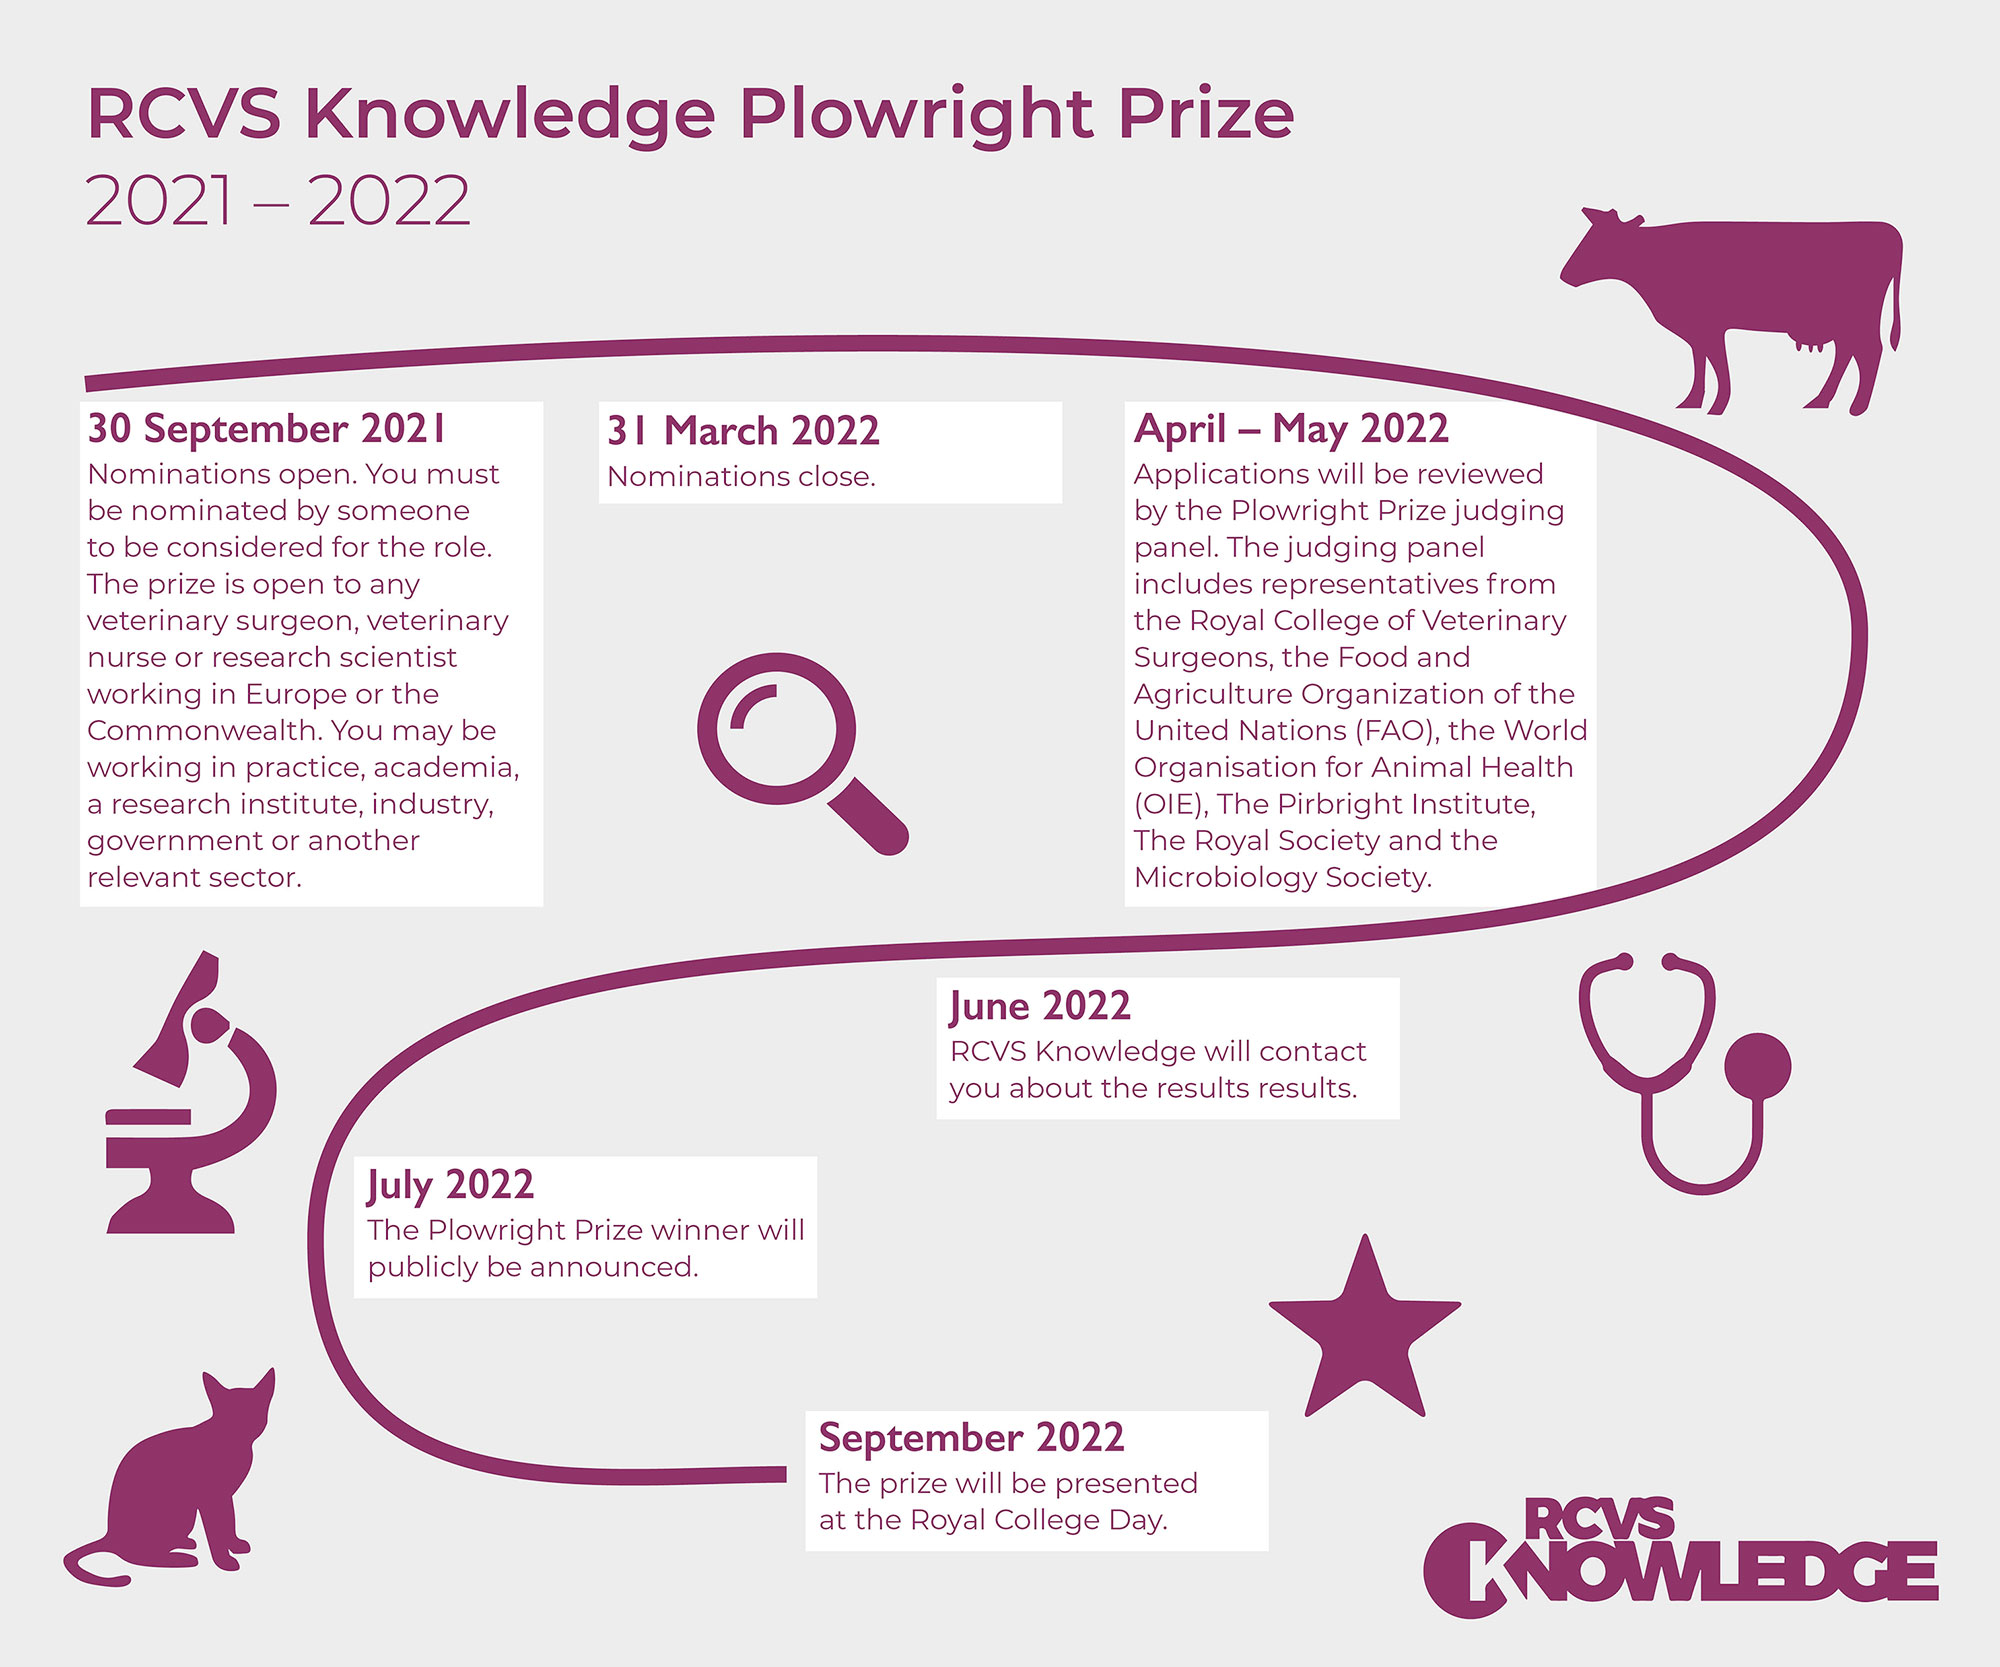 Plowright Prize 2021-2022 timeline